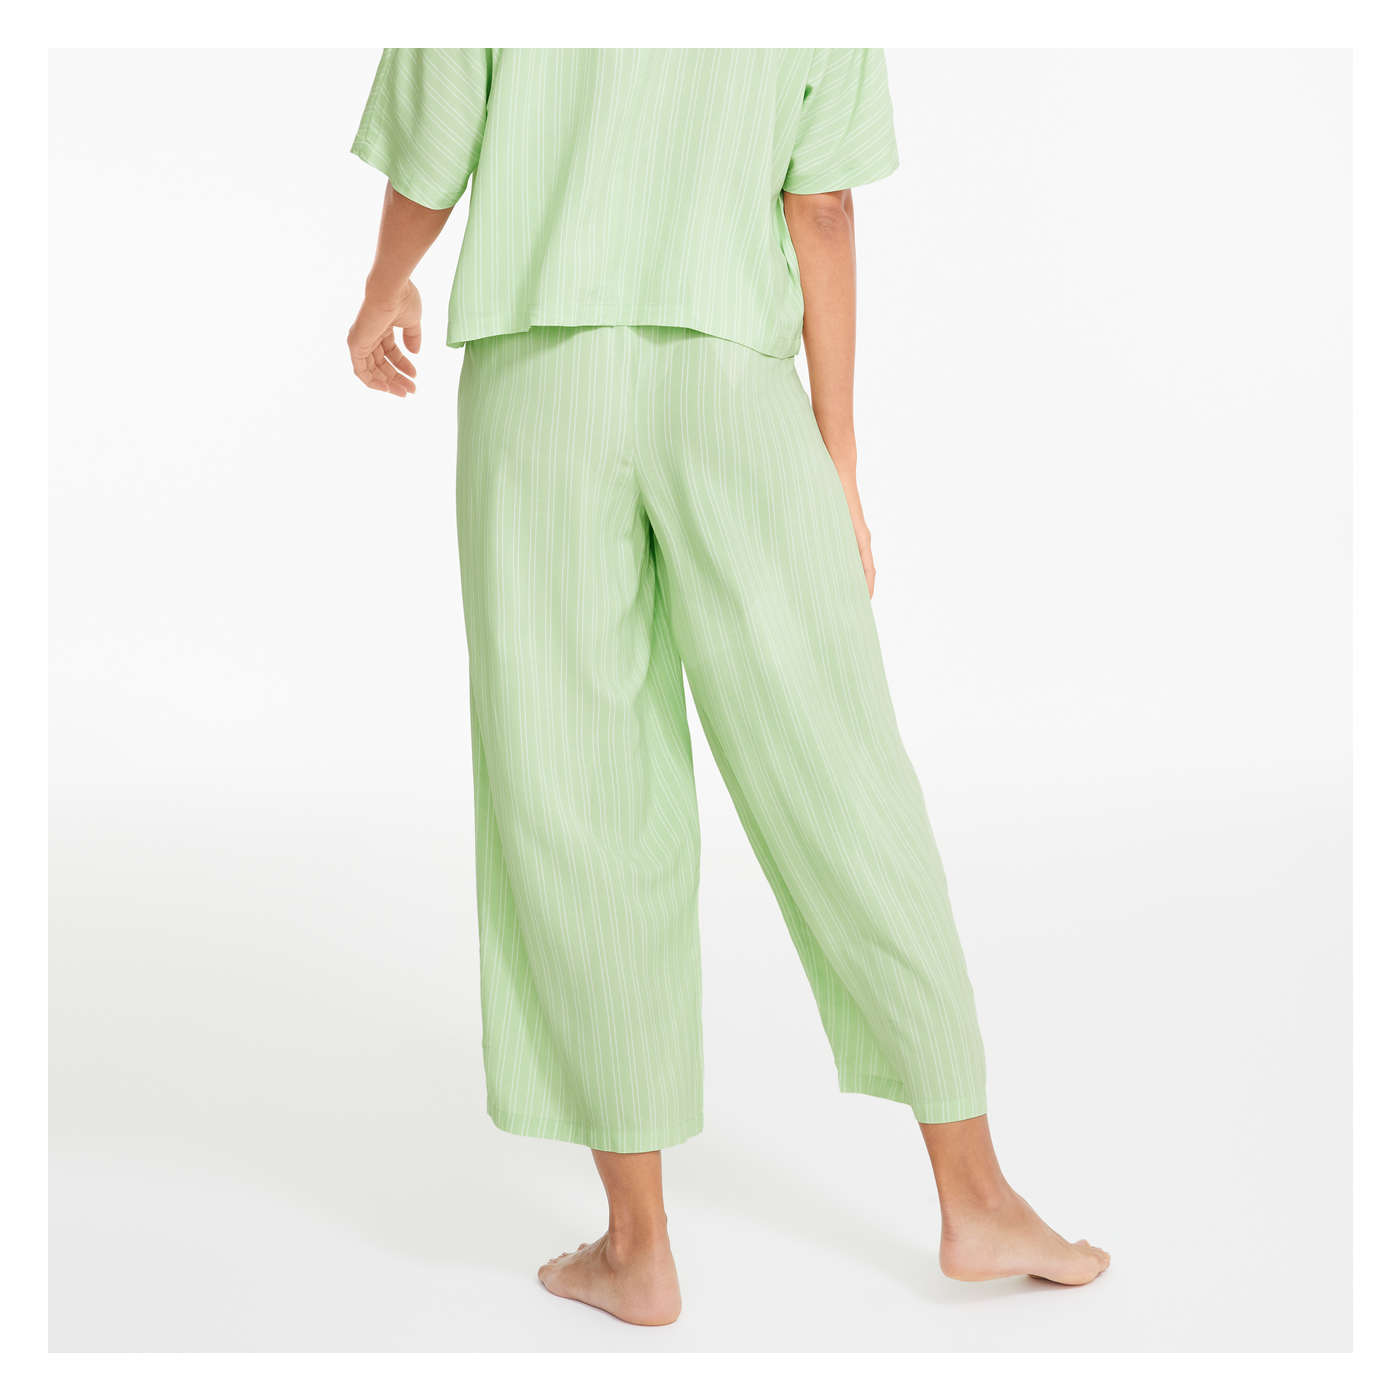 Crop Pajama Pant in Pastel Green from Joe Fresh